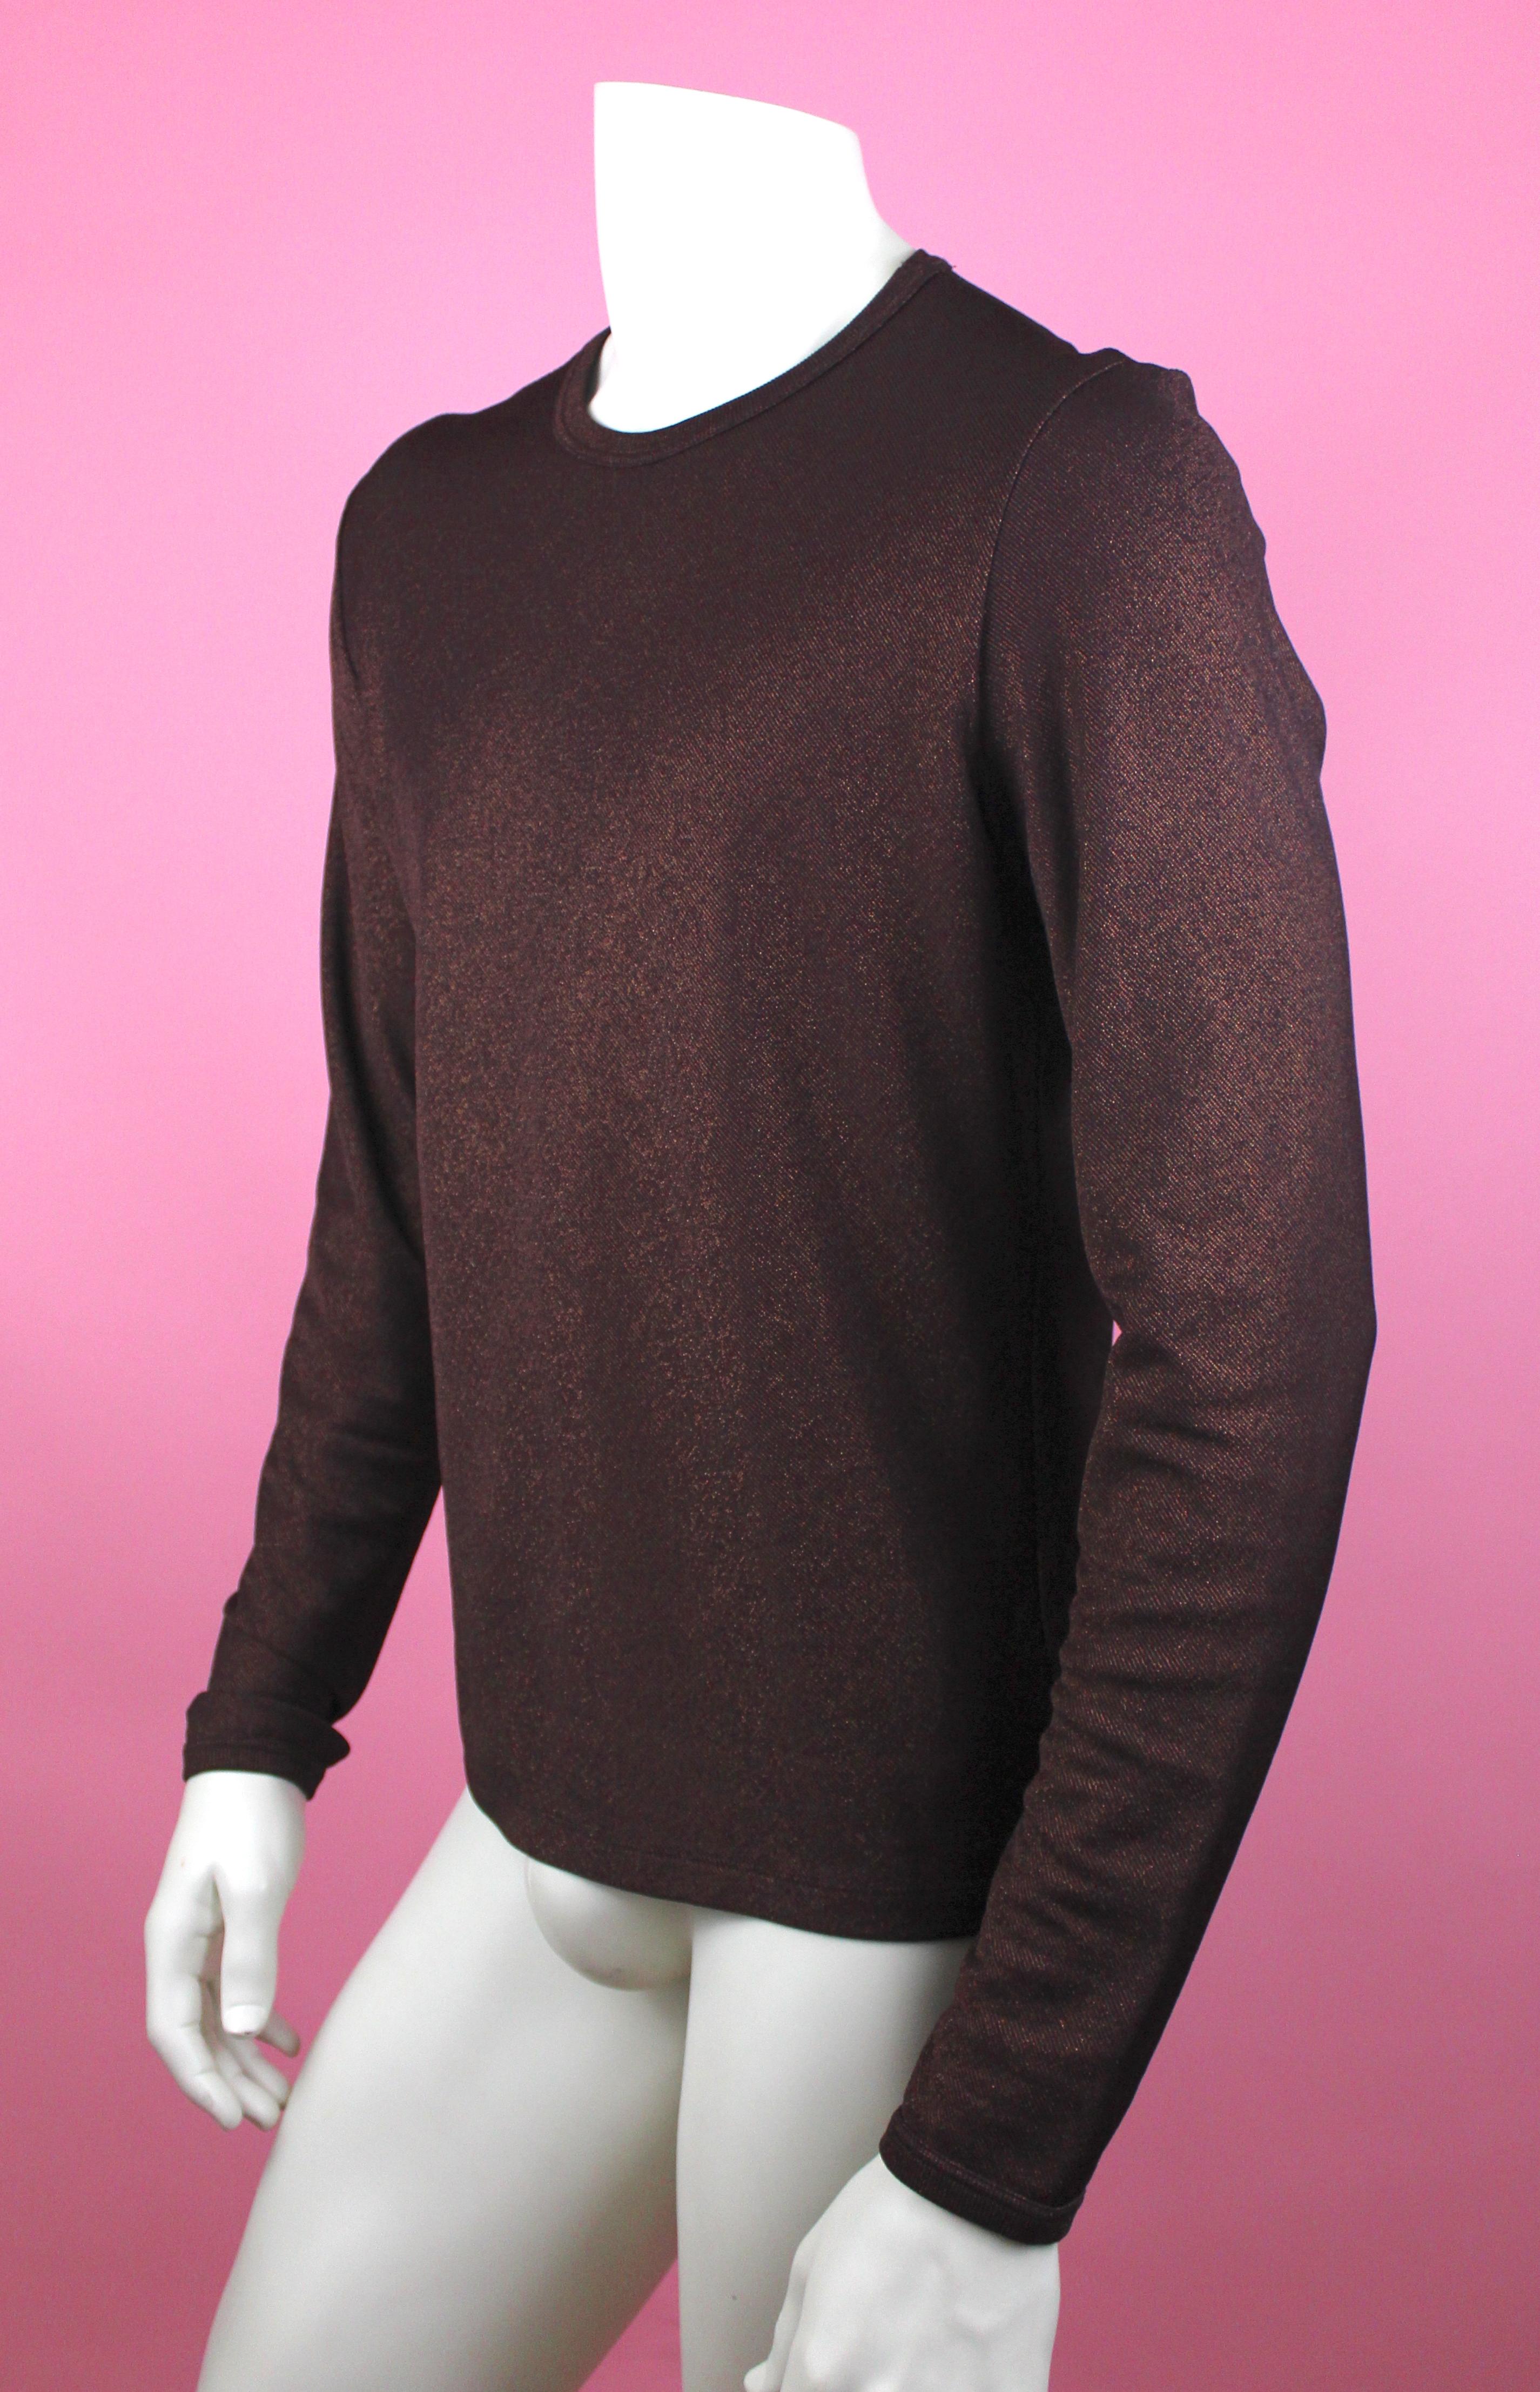 Black Jean Paul Gauliter Classique Burgundy Lurex Long Sleeve Shirt, Size 54 IT For Sale